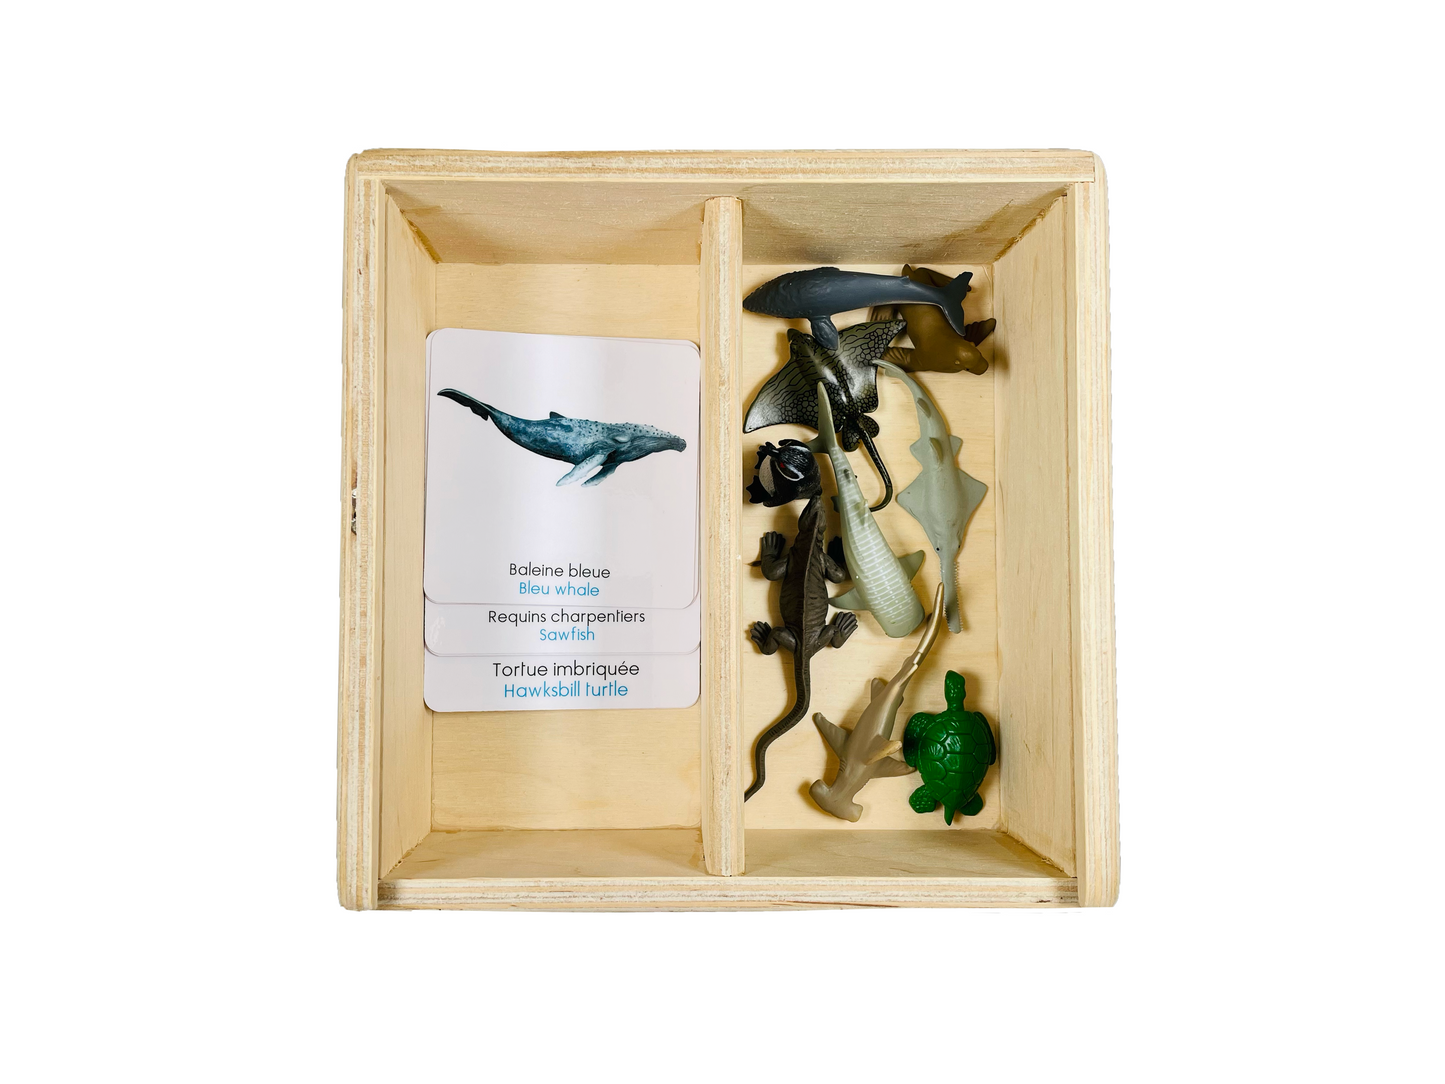 Endangered marine animals figurine box